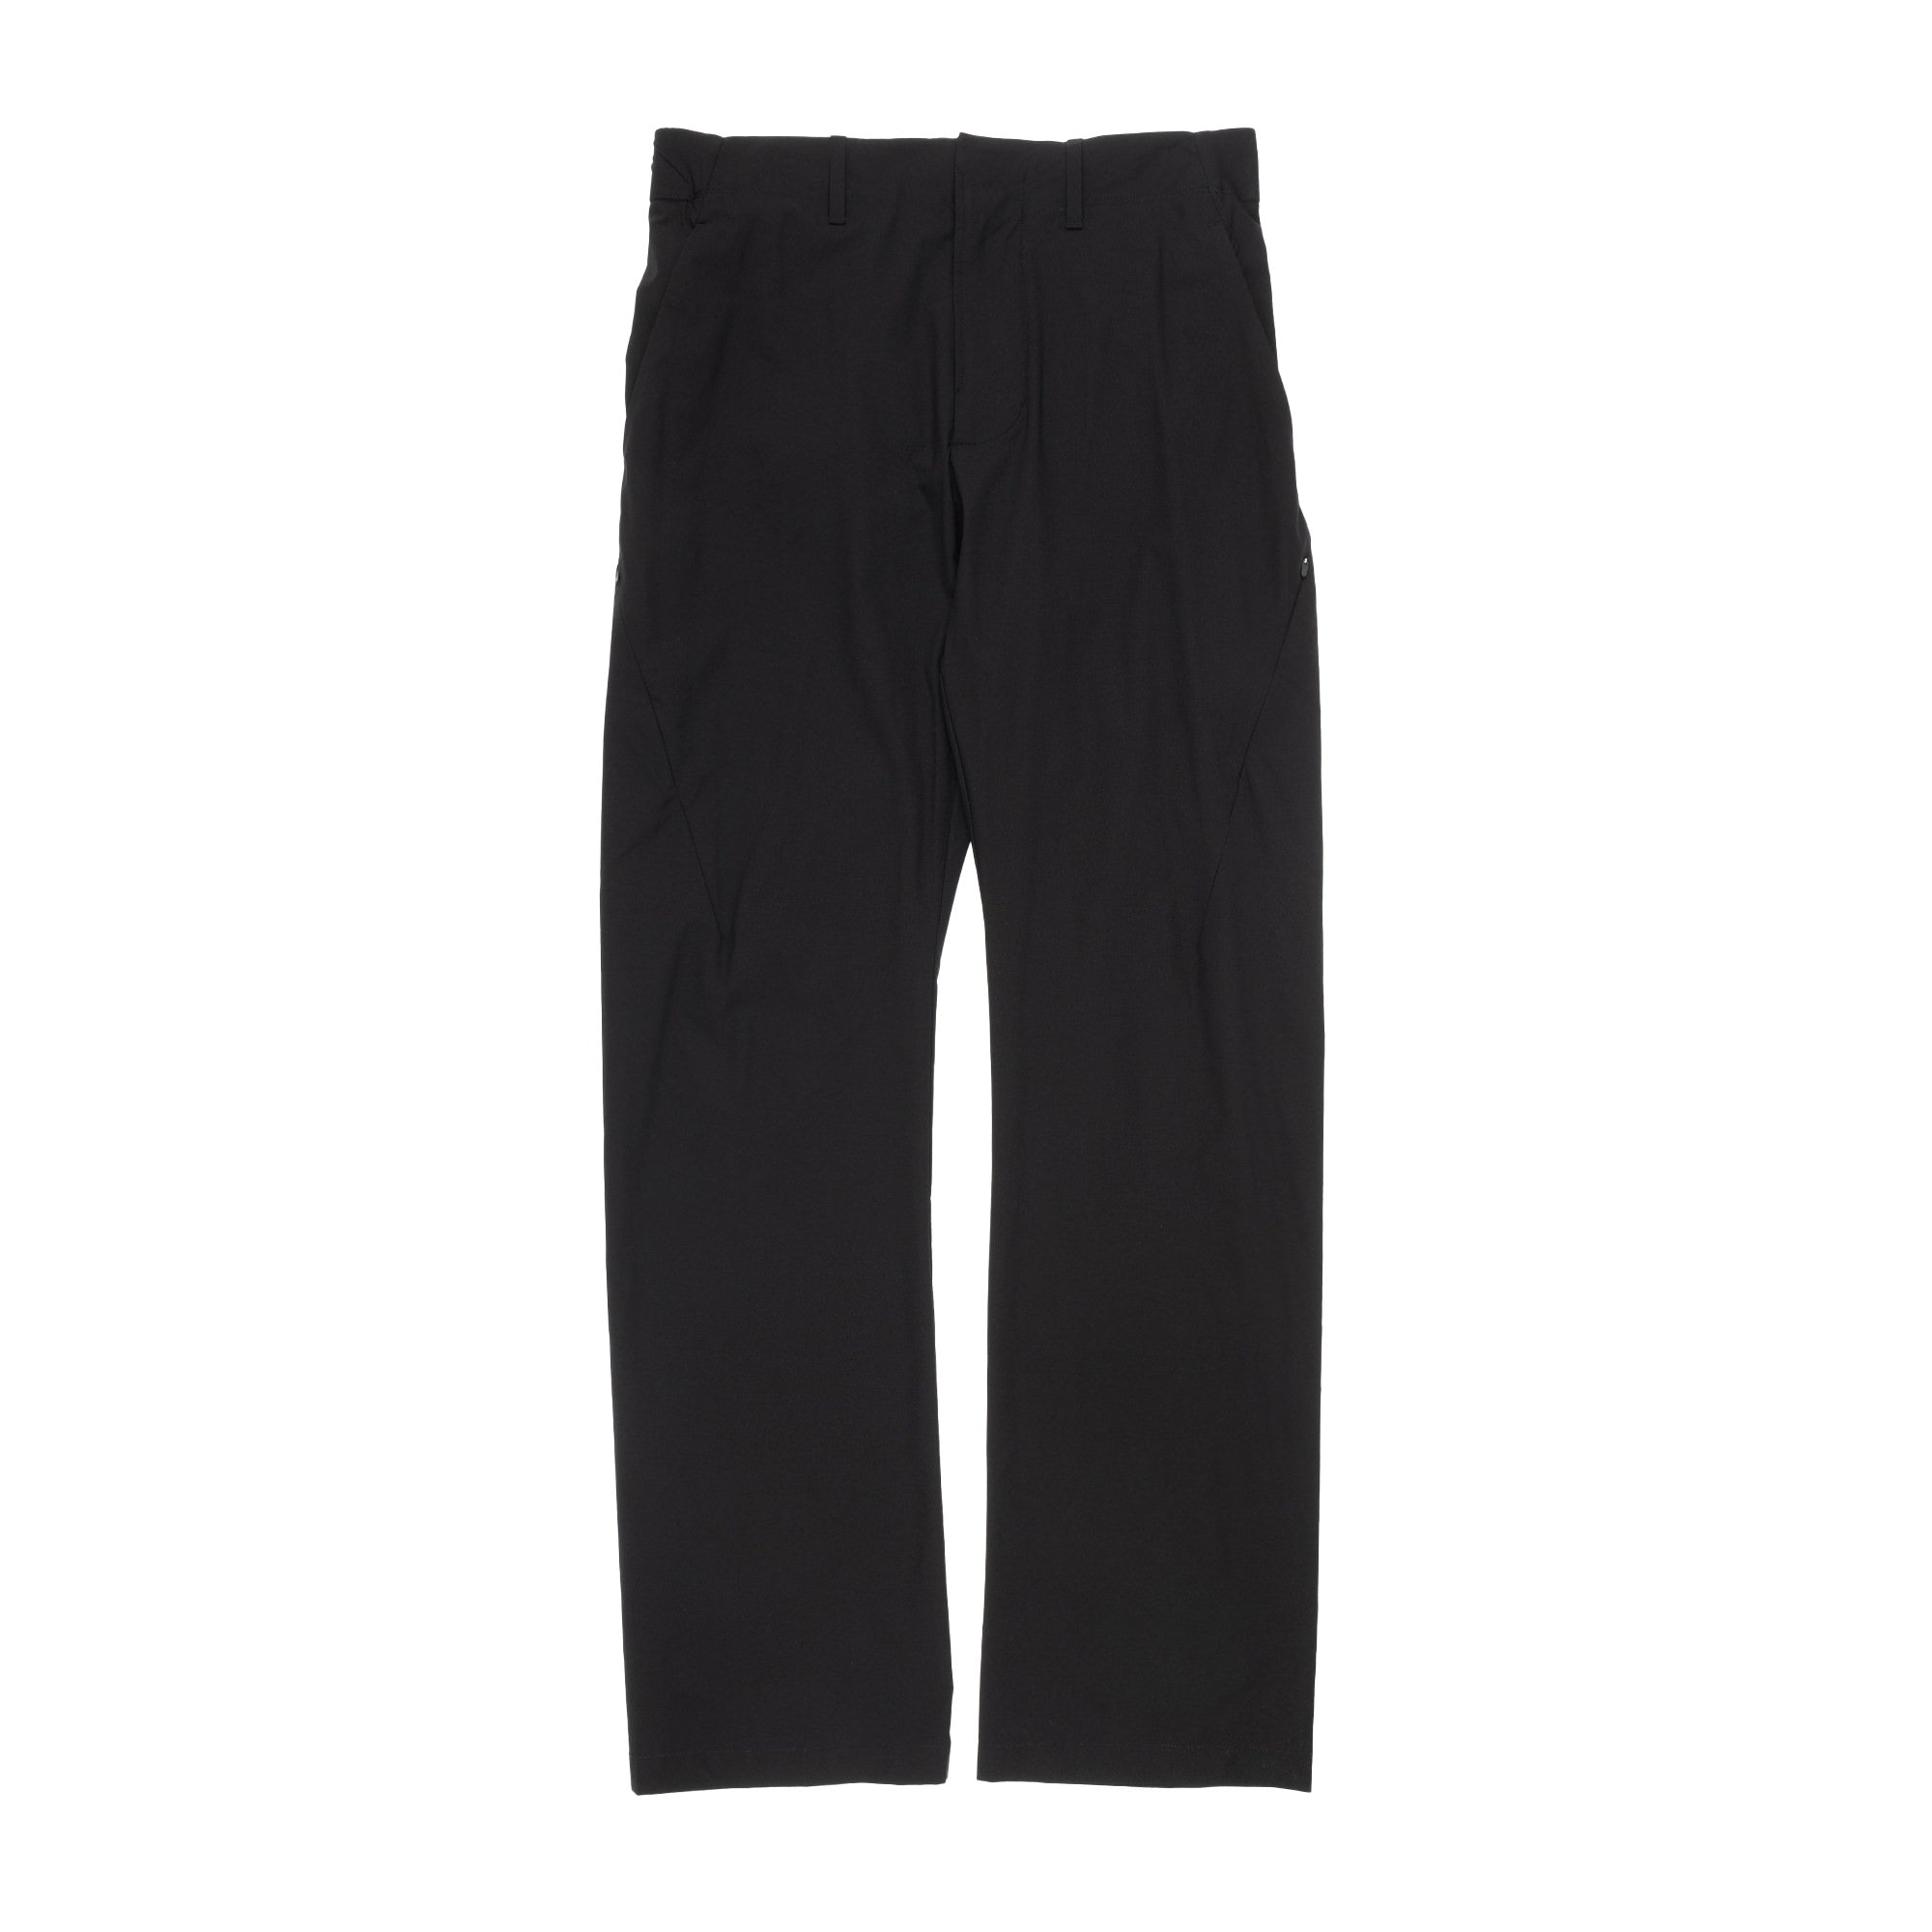 Go Softwear 100% Cotton Pull-On Yoga Pant Black 4758 at International Jock